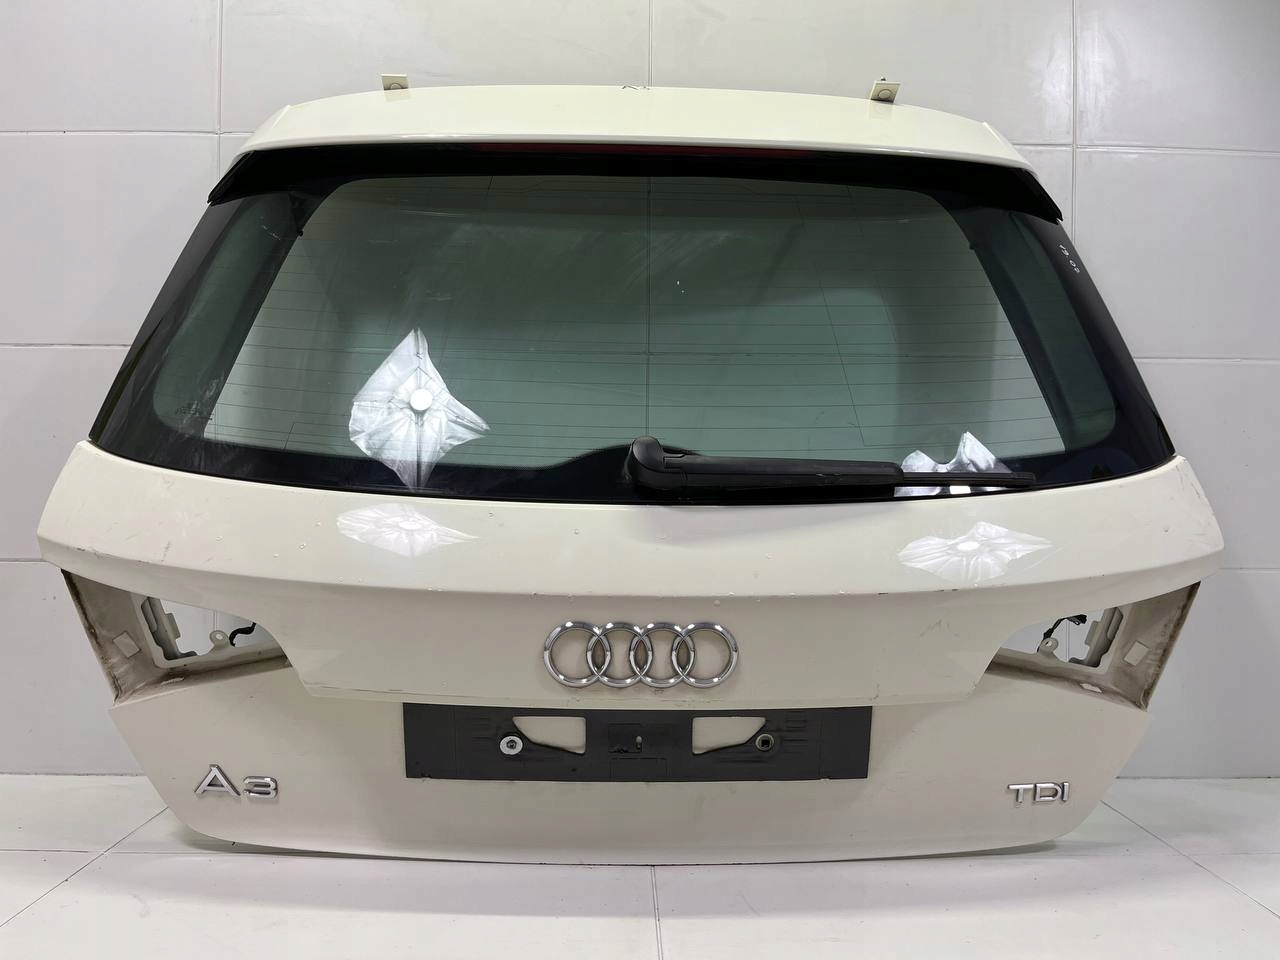 Audi a3 trunk rear - Easy Online Shopping ❱ XDALYS